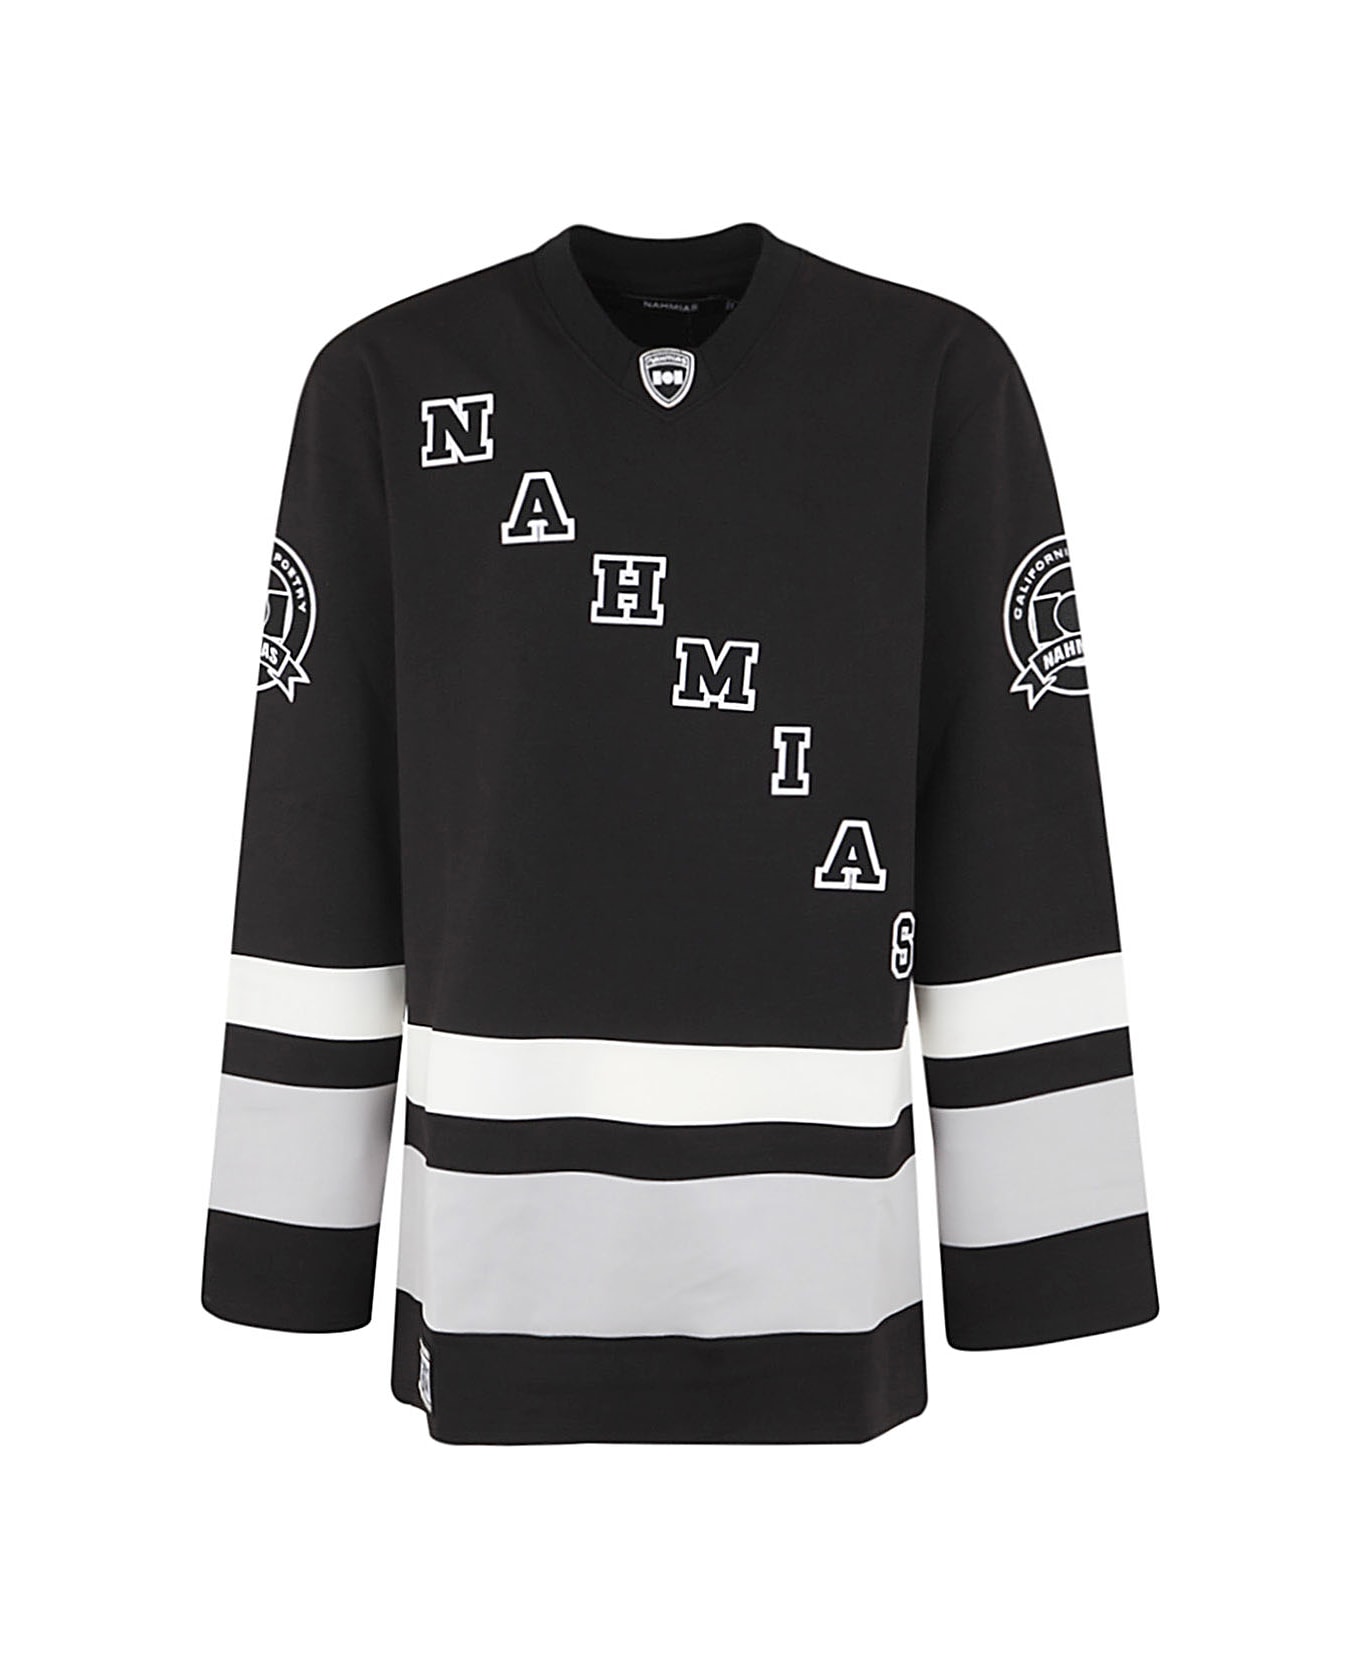 Nahmias Hockey Jersey - Black